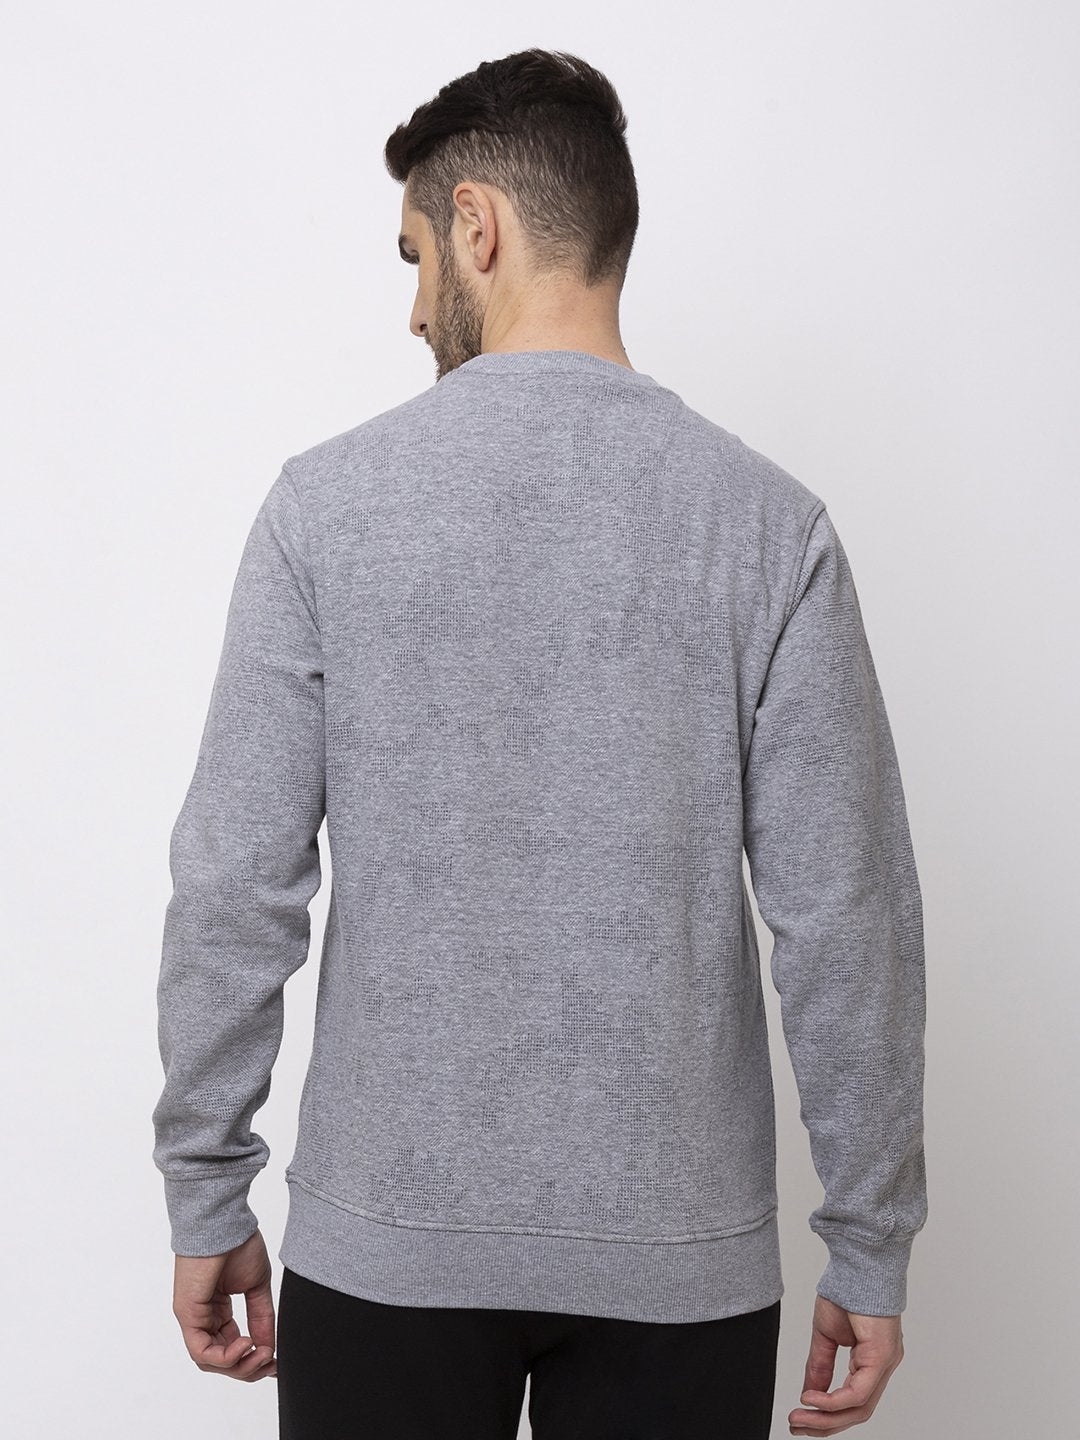 Status Quo | Men's Grey Polycotton Printed Sweatshirts 5